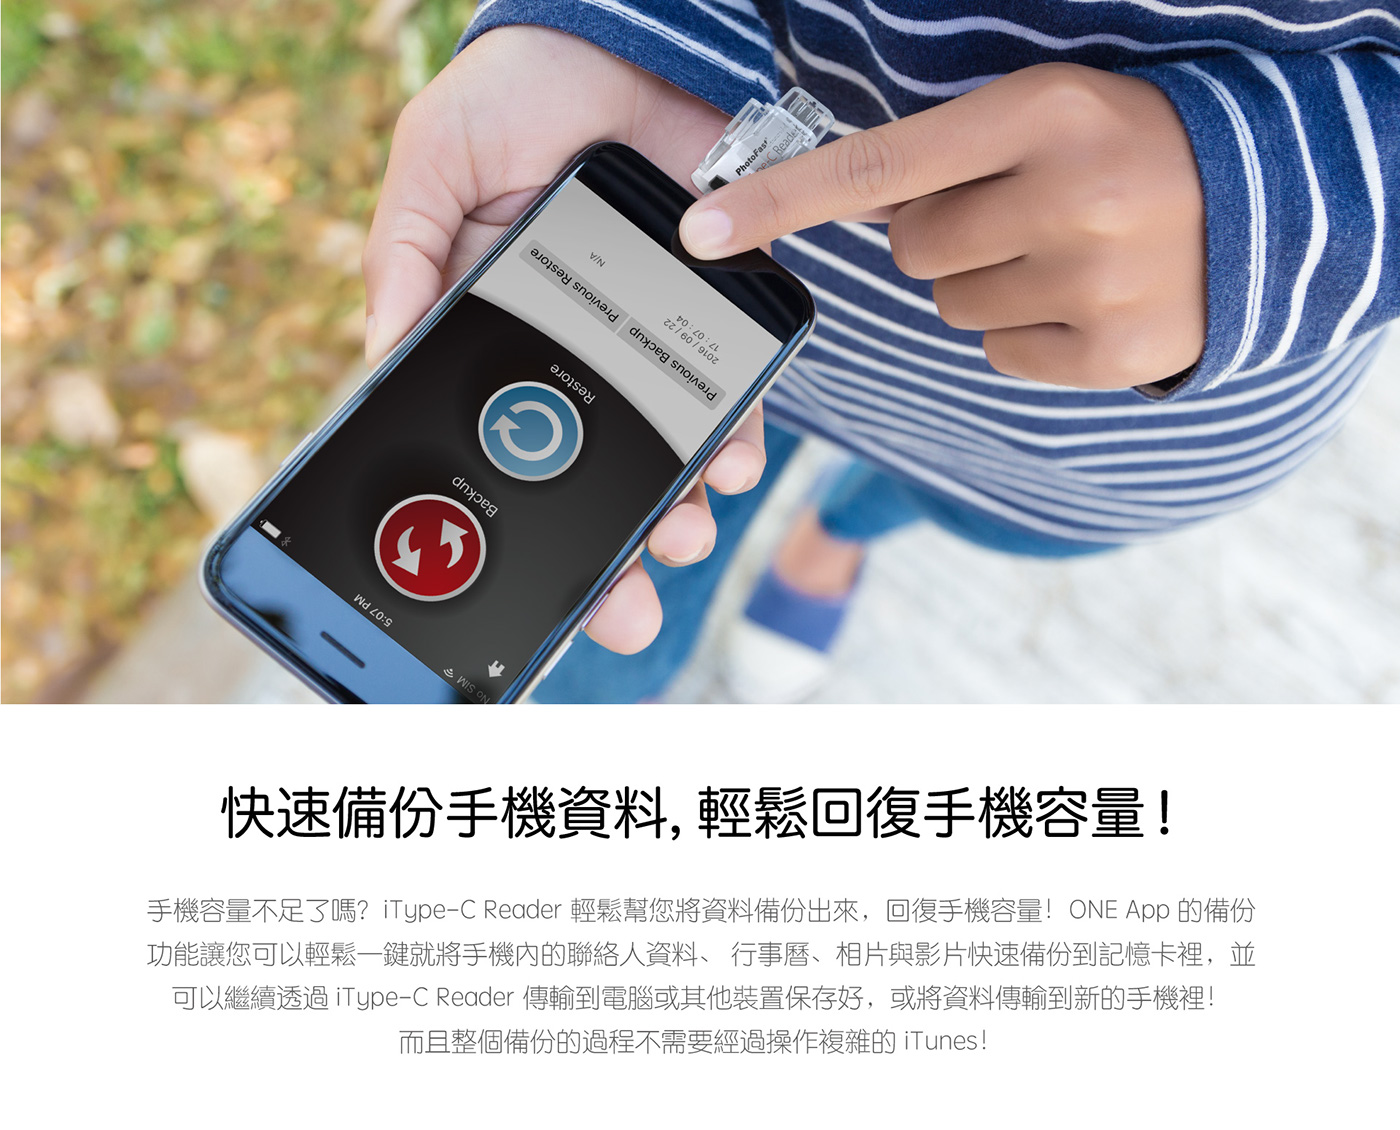 Web product iphone Type-C tech card reader apple design iPhone x macbook